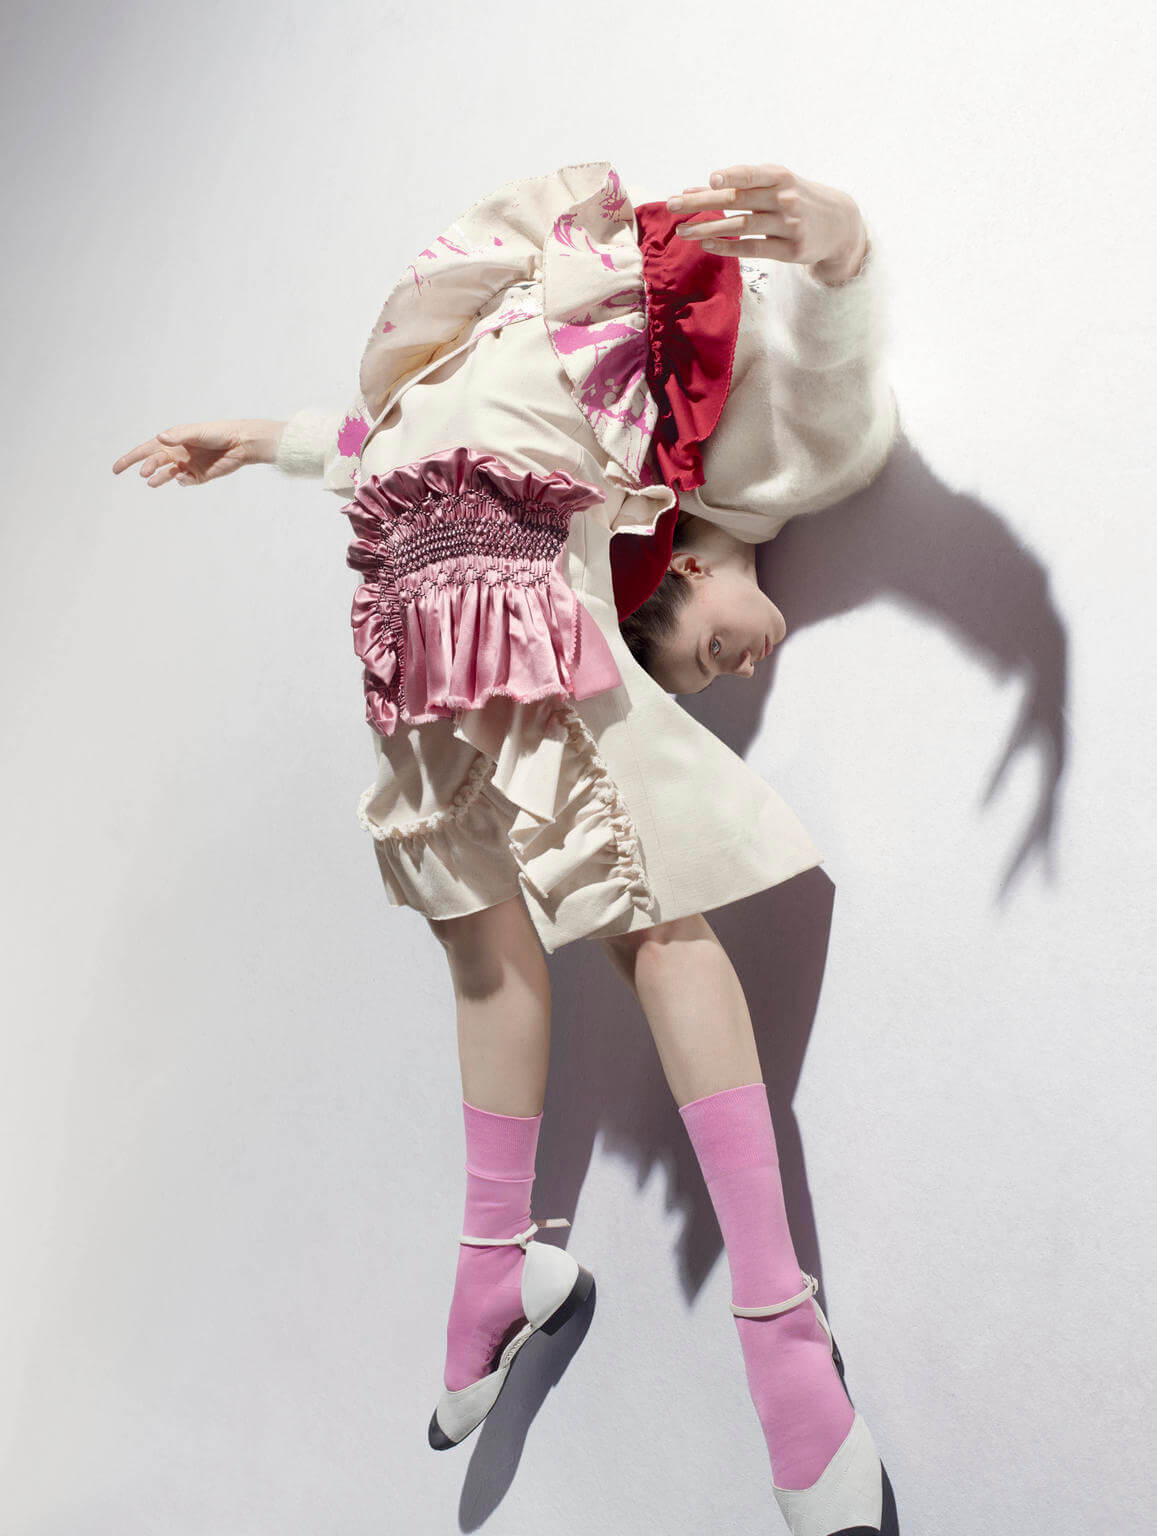 Vogue Italia March 2020 by Mert Alas & Marcus Piggott | Liz Santos Style